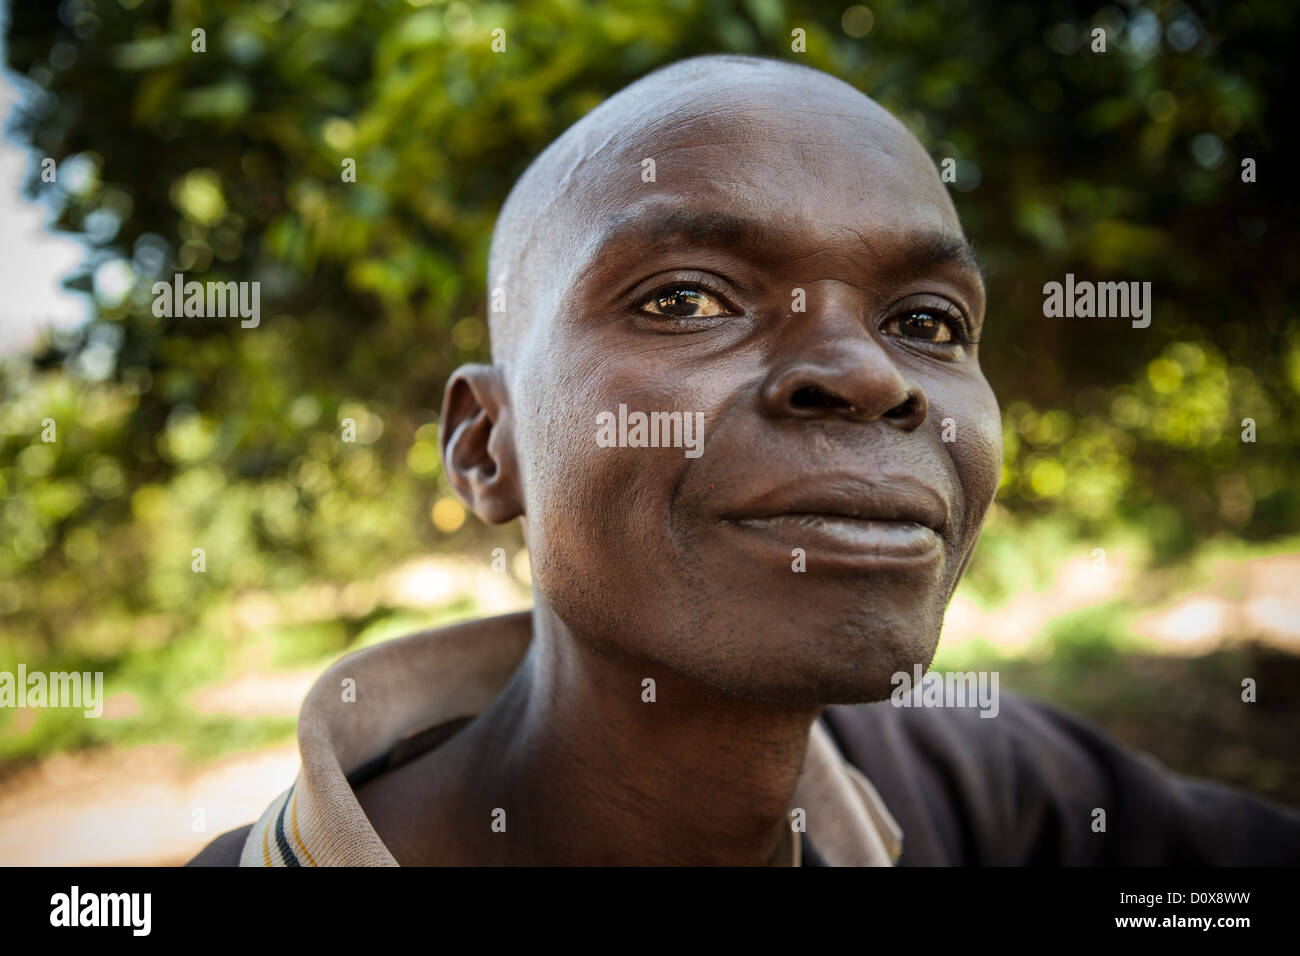 Portrait of a man with HIV / AIDS - Kaberamaido, Uganda, East Africa. Stock Photo